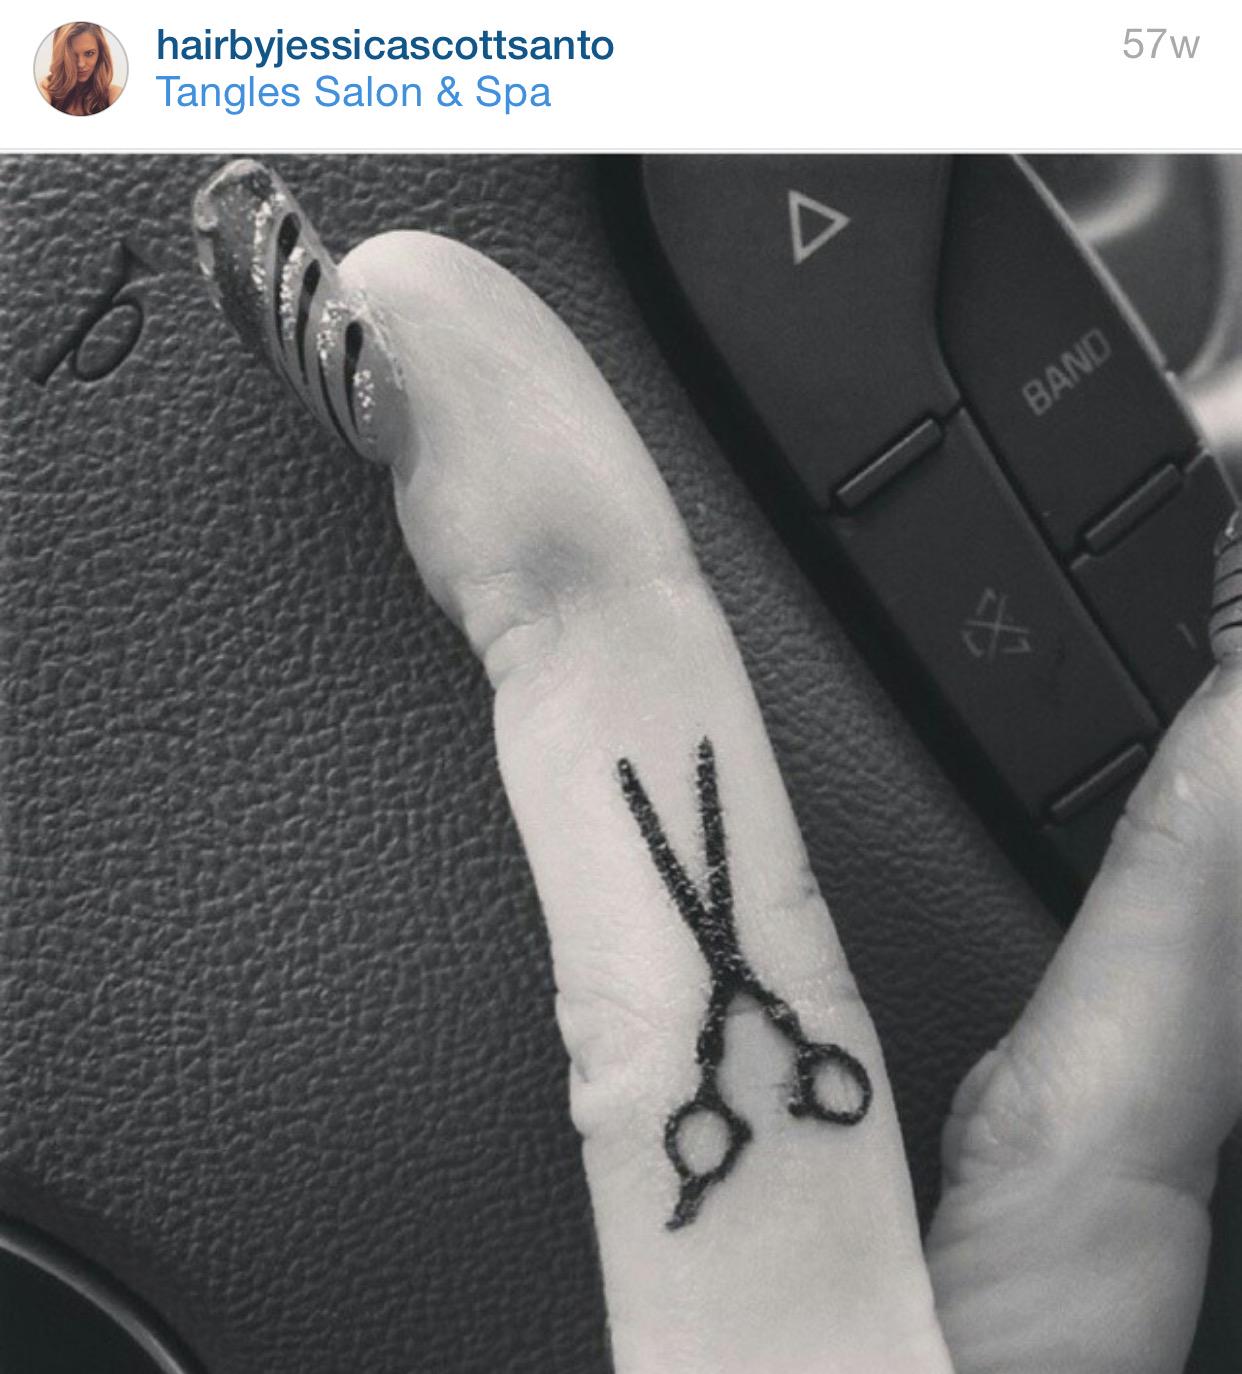 Jessica Scott Santo on Twitter scissor tattoo hairbyjessicascottsanto  btcpics wellalife wellahair hairbyjessicascottsanto hairstylist  httptco0QYOLnX3ww  Twitter